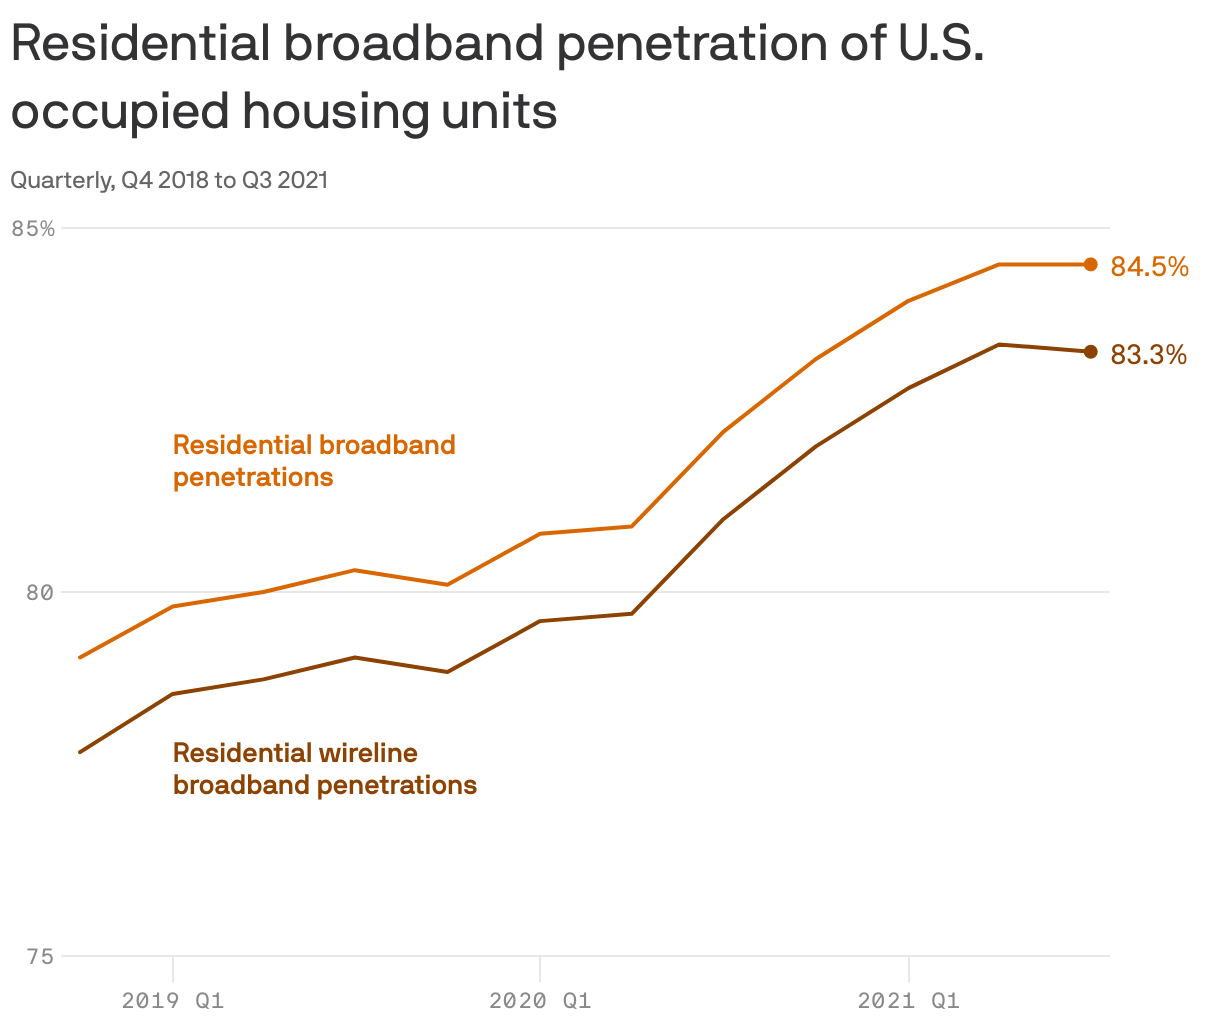 Residential broadband penetration of U.S. occupied housing units